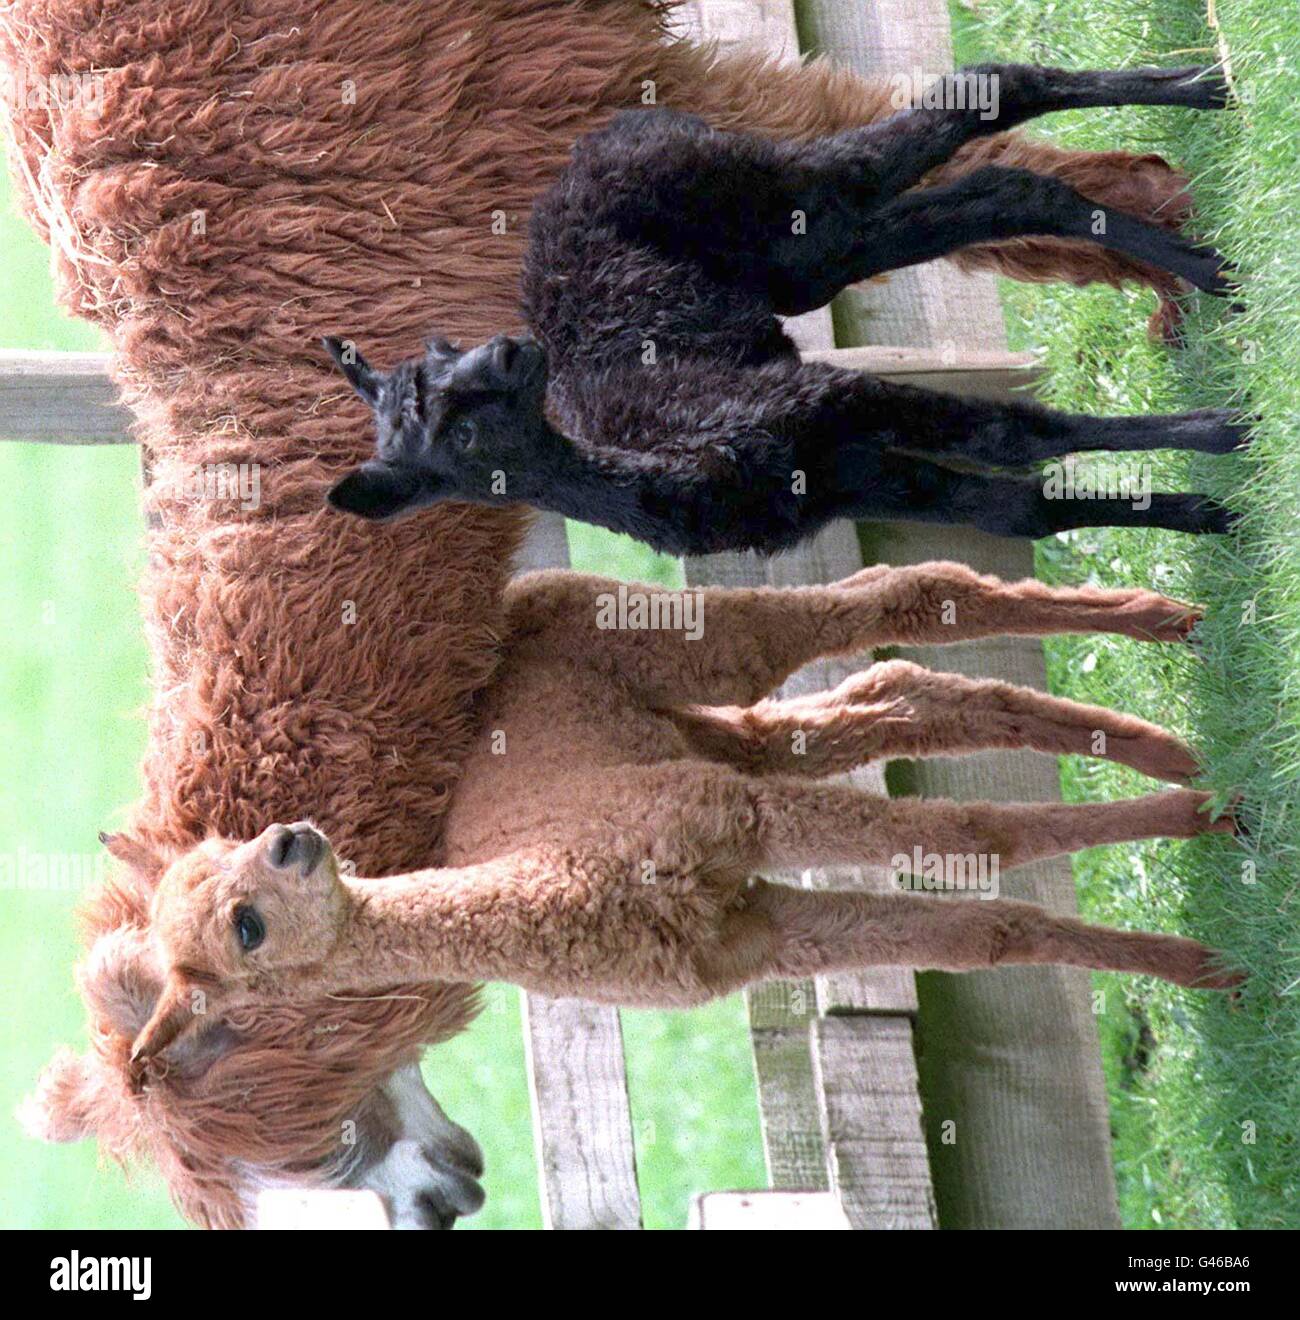 ANIMALS Alpacas3 Stock Photo